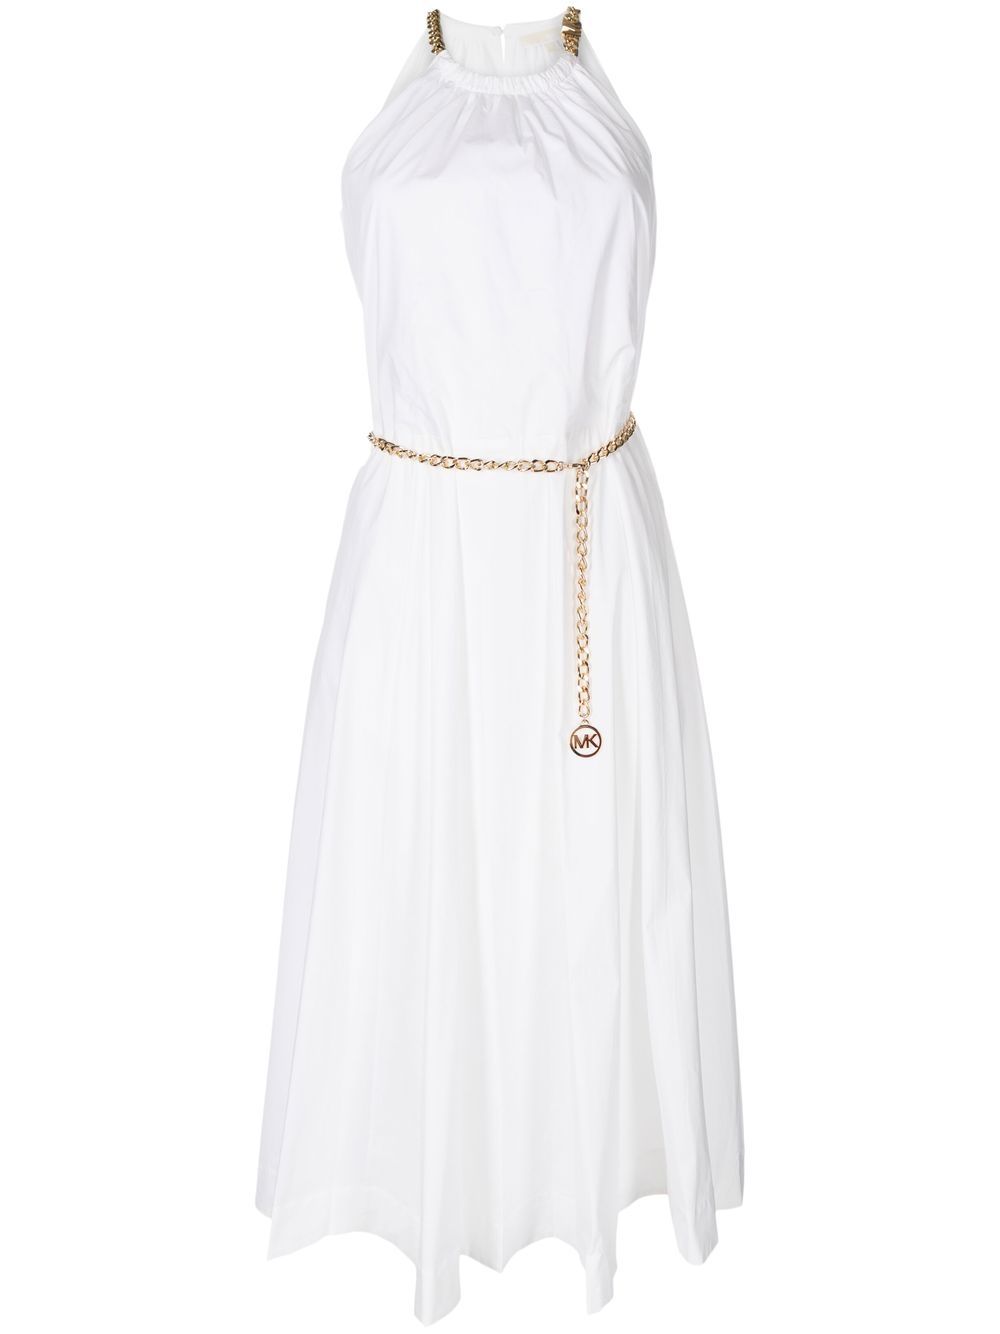 Michael Kors chain-neck organic cotton halter dress - White